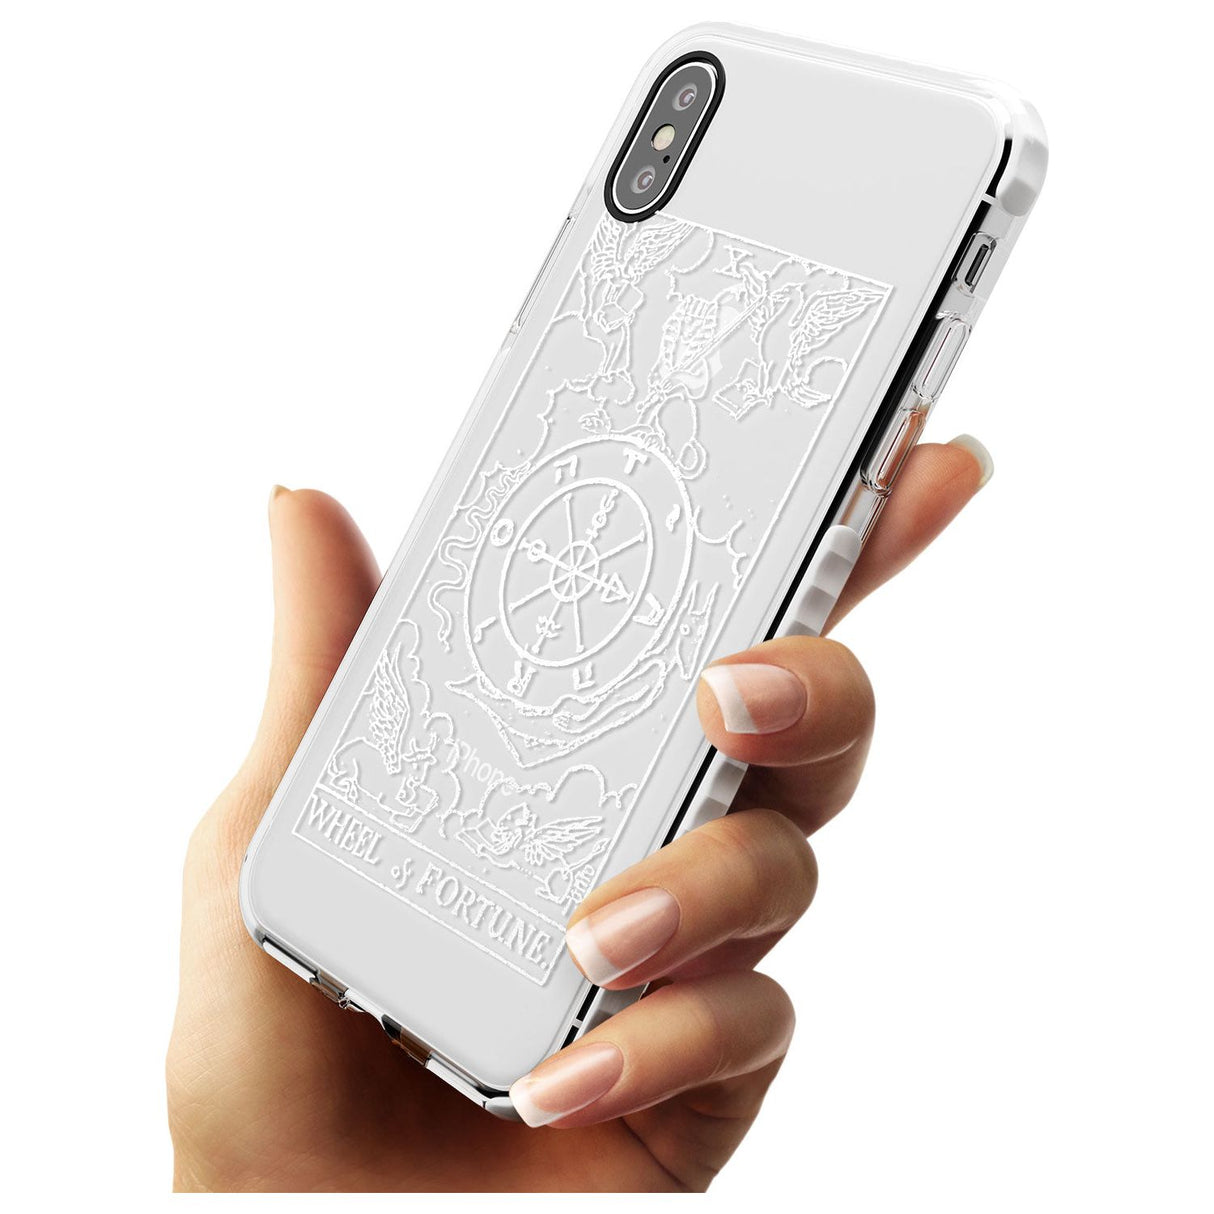 Wheel of Fortune Tarot Card - White Transparent Slim TPU Phone Case Warehouse X XS Max XR